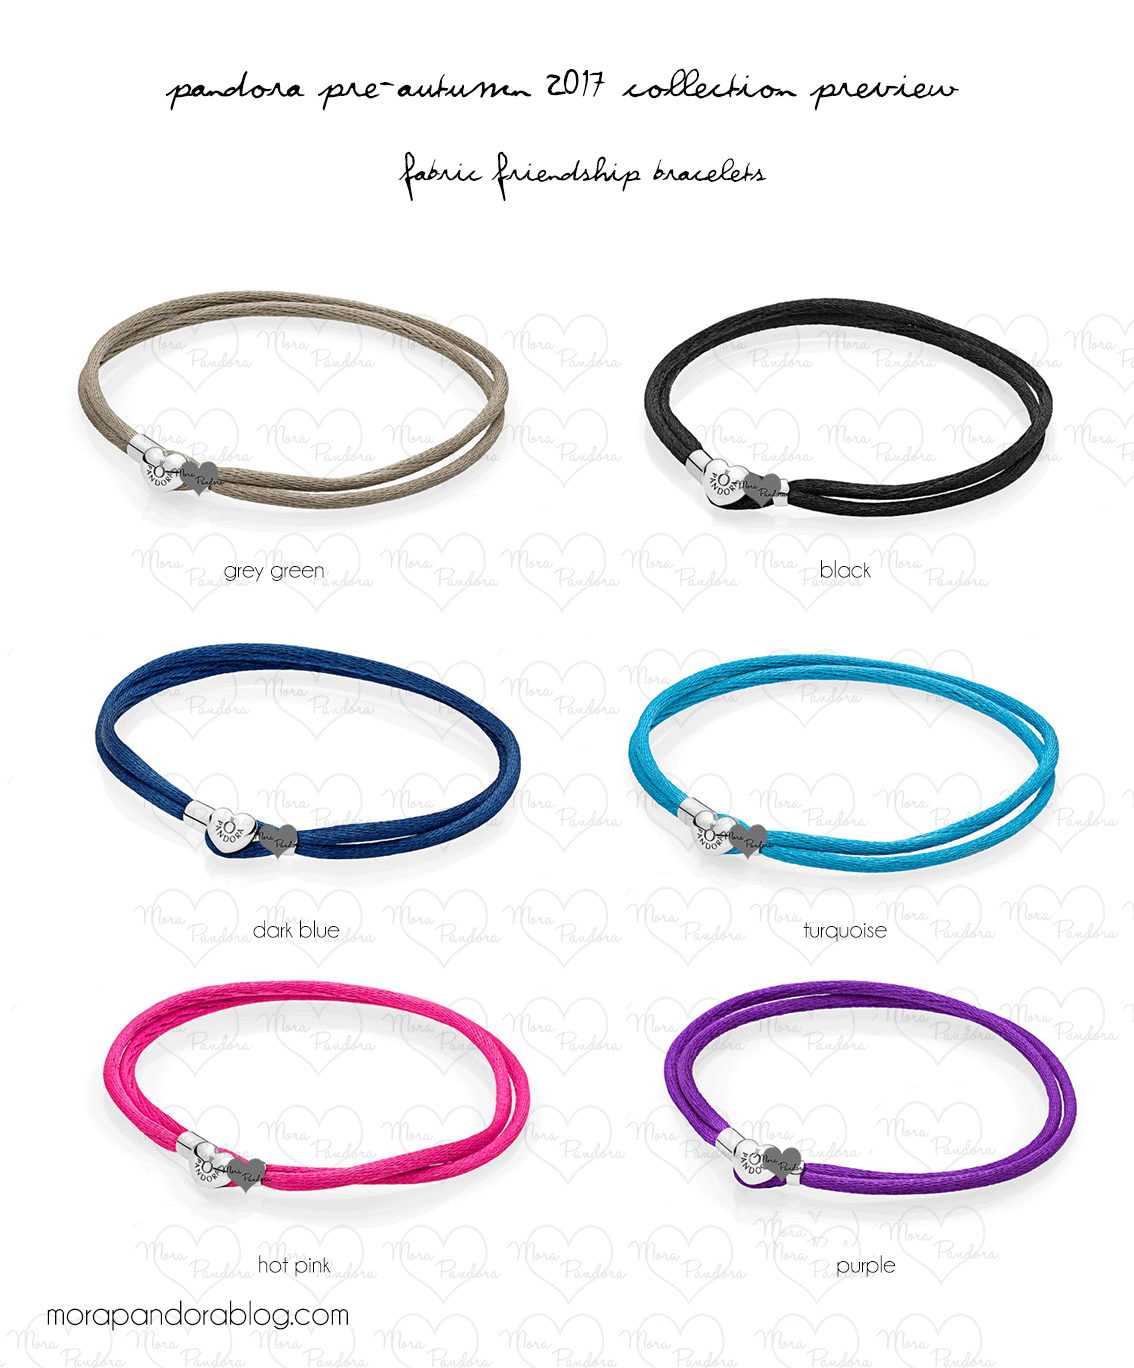 Pandora Pre-Autumn 2017 fabric bracelets